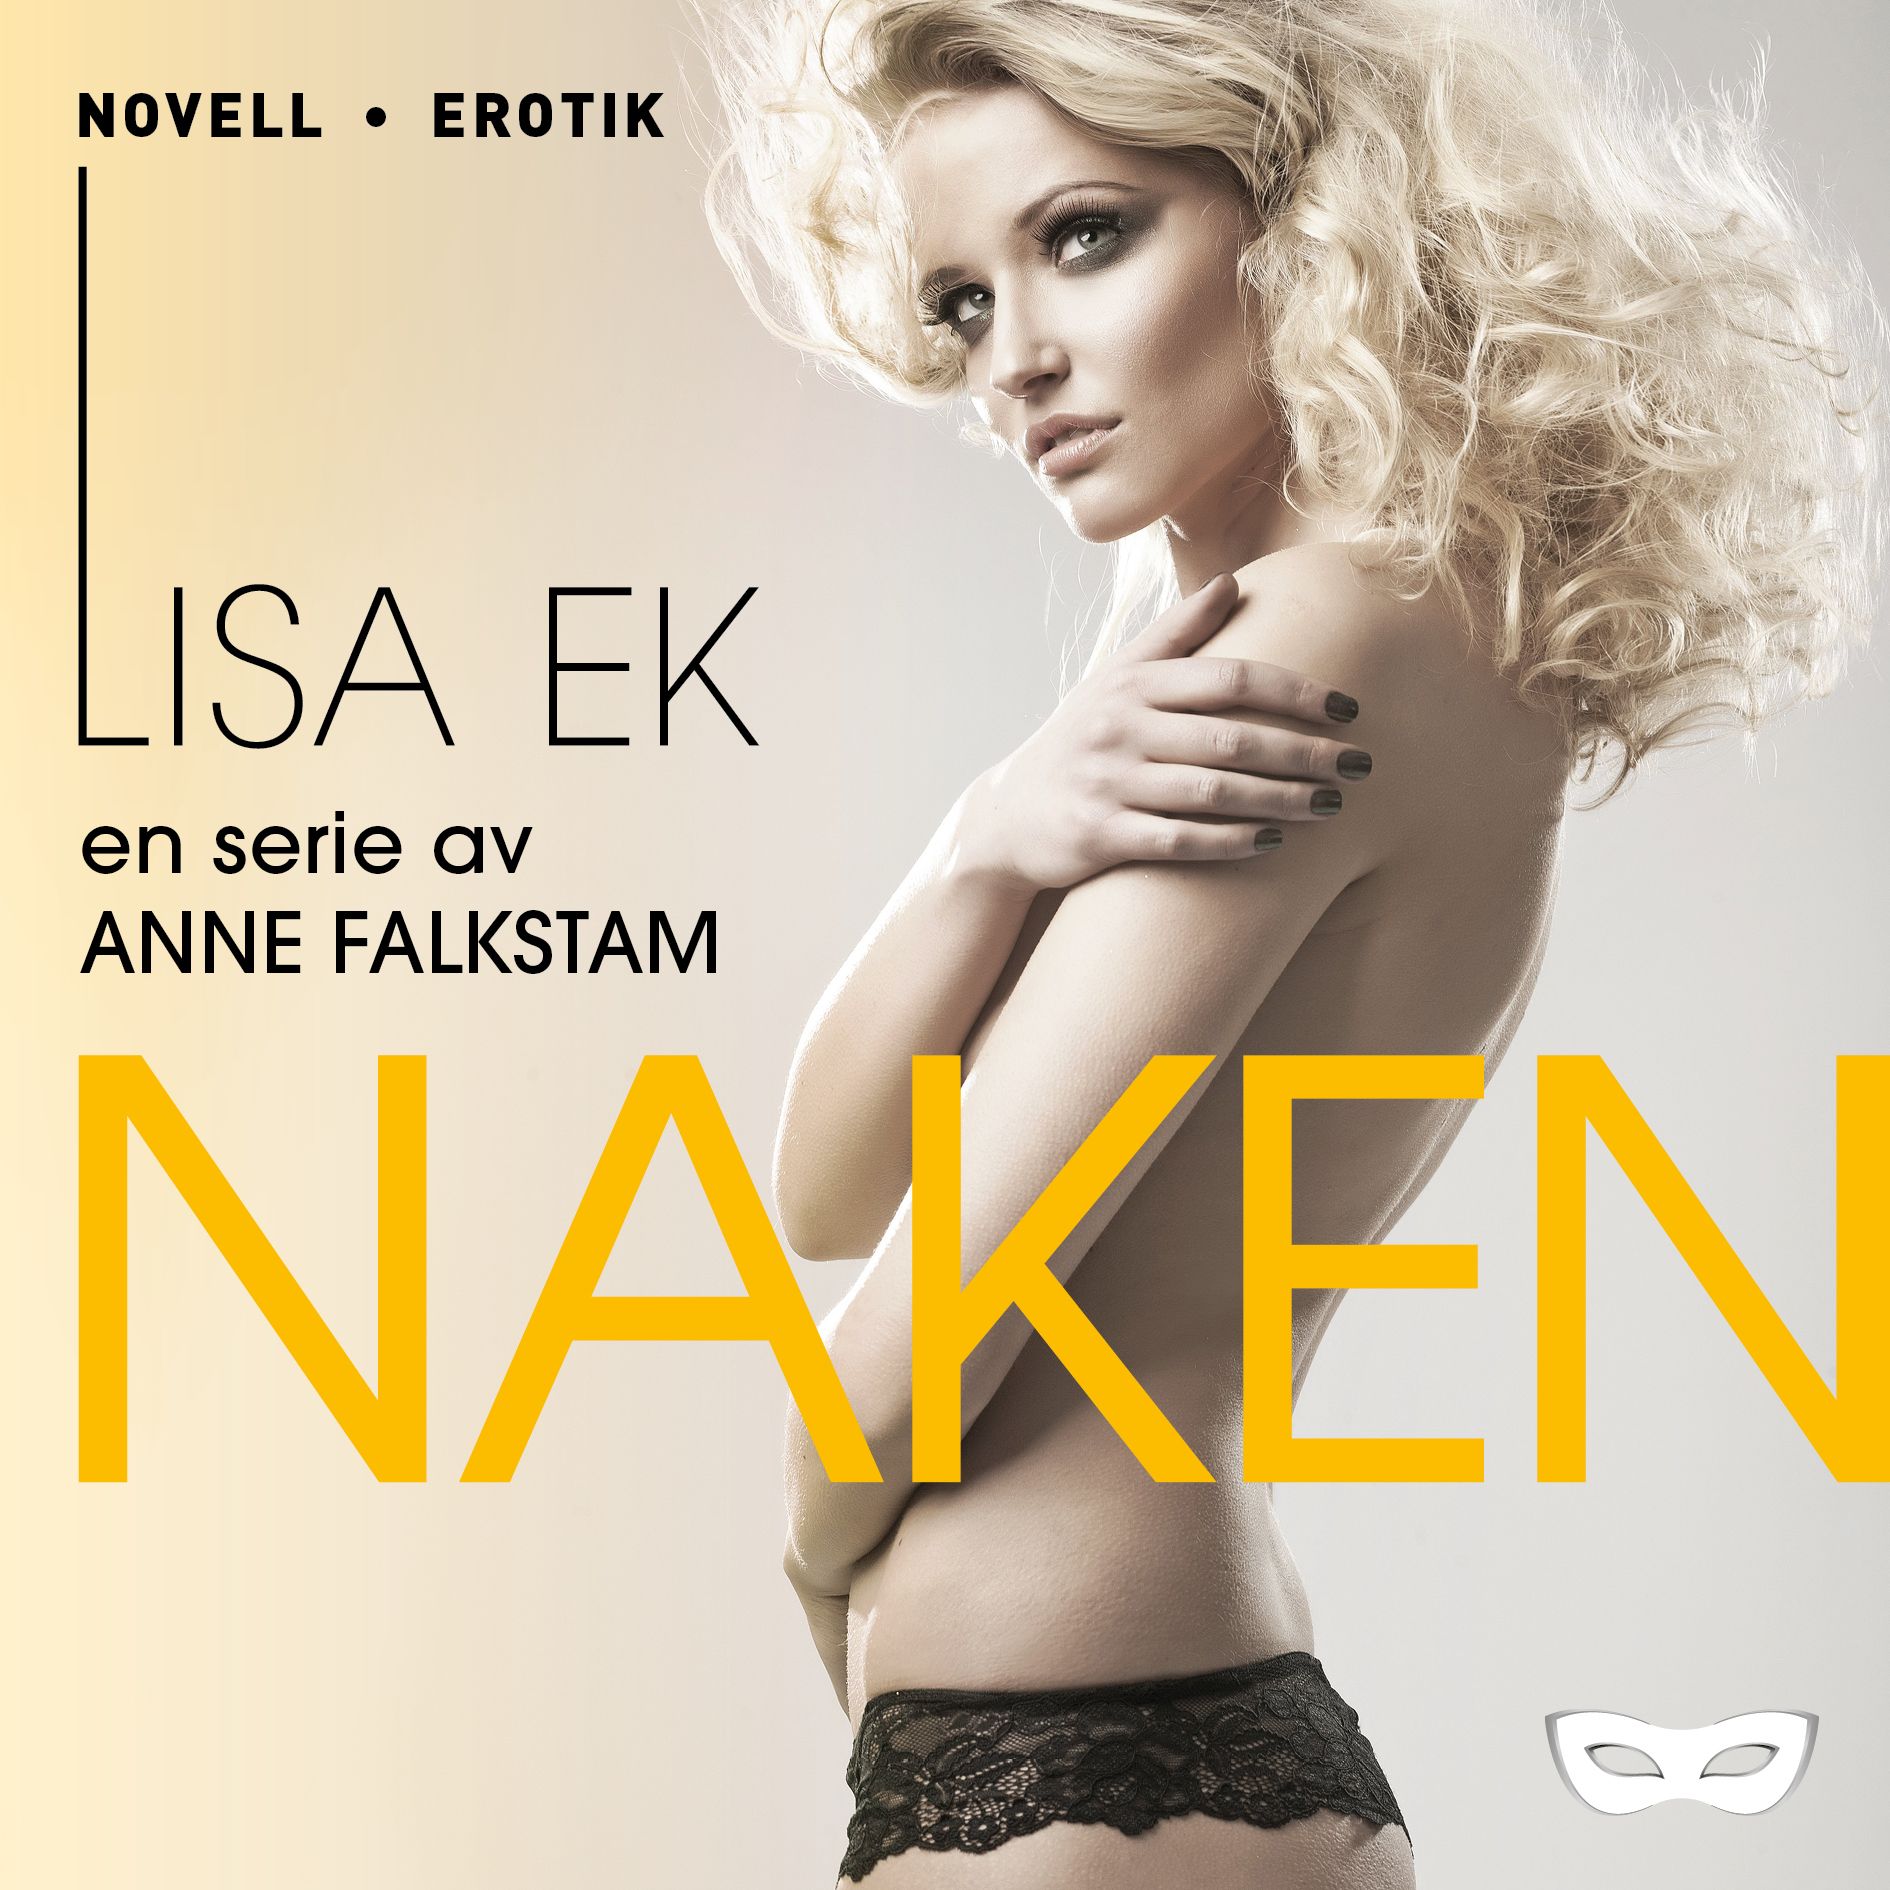 Naken, ljudbok av Anne Falkstam